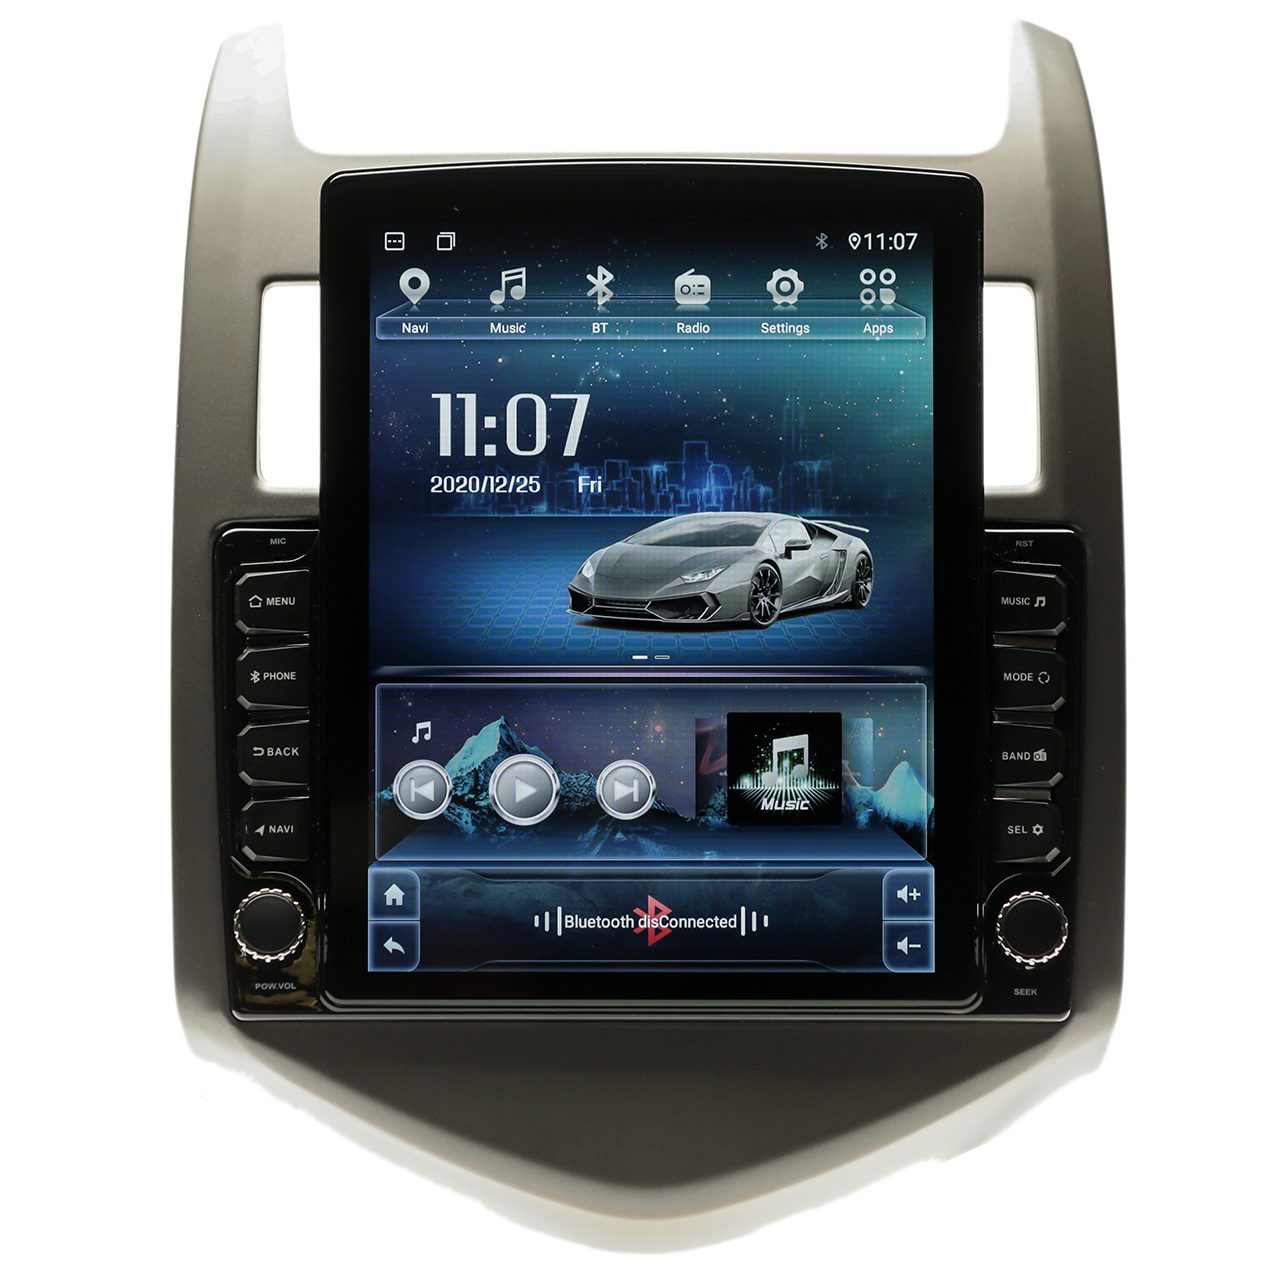 Navigatie AUTONAV PLUS Android GPS Dedicata Chevrolet Aveo T300 2011-2015, Model XPERT Memorie 16GB Stocare, 1GB DDR3 RAM, Butoane Si Volum Fizice, Display Vertical Stil Tesla 10